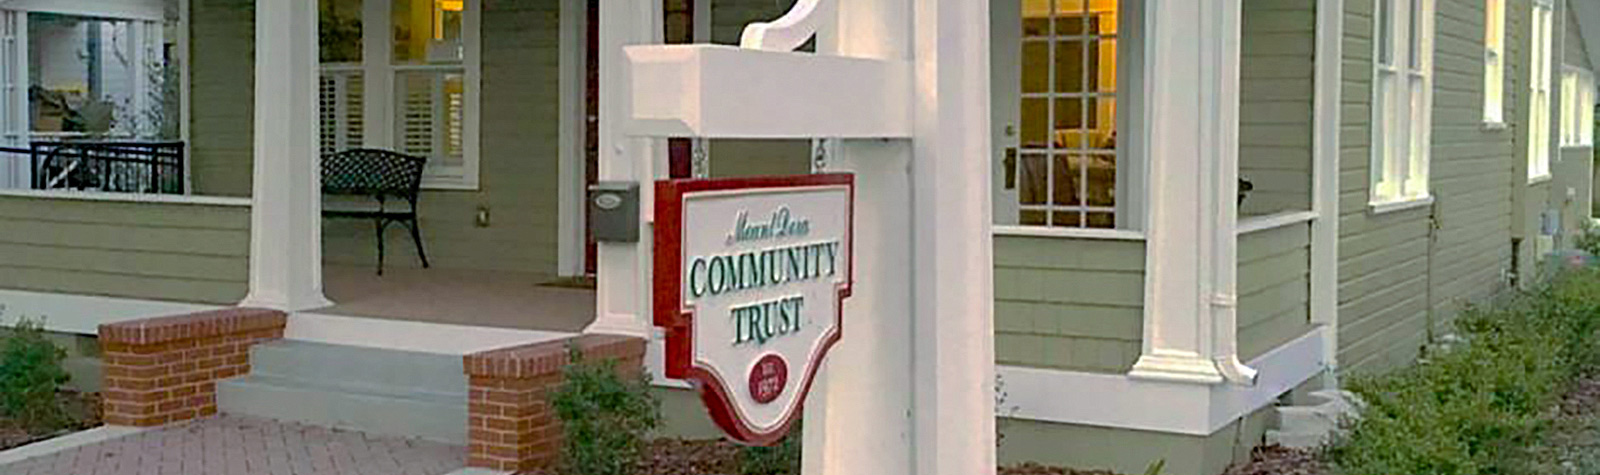 exterior of the Mount Dora Community Trust building